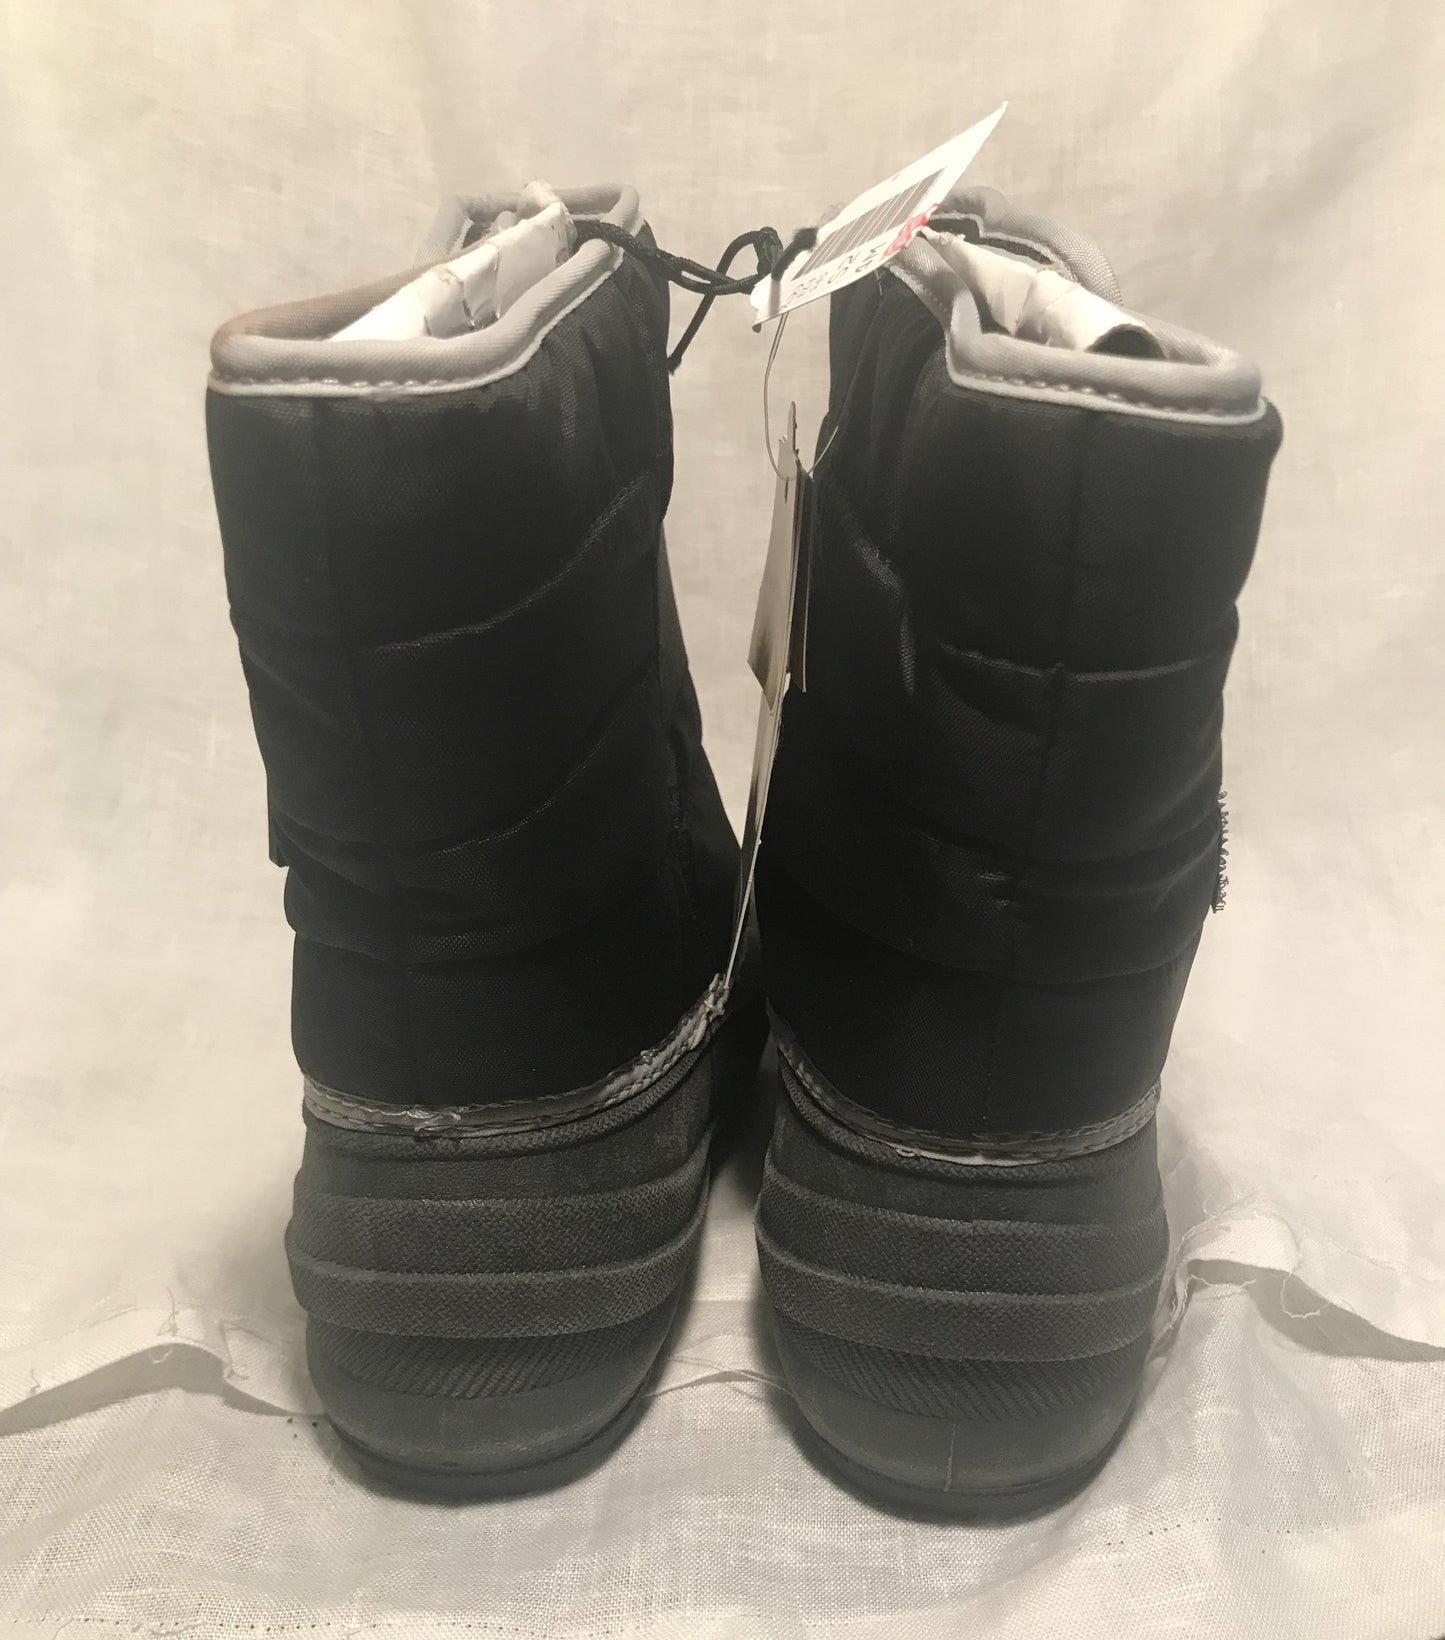 Black & Gray Boots- Sizes 7